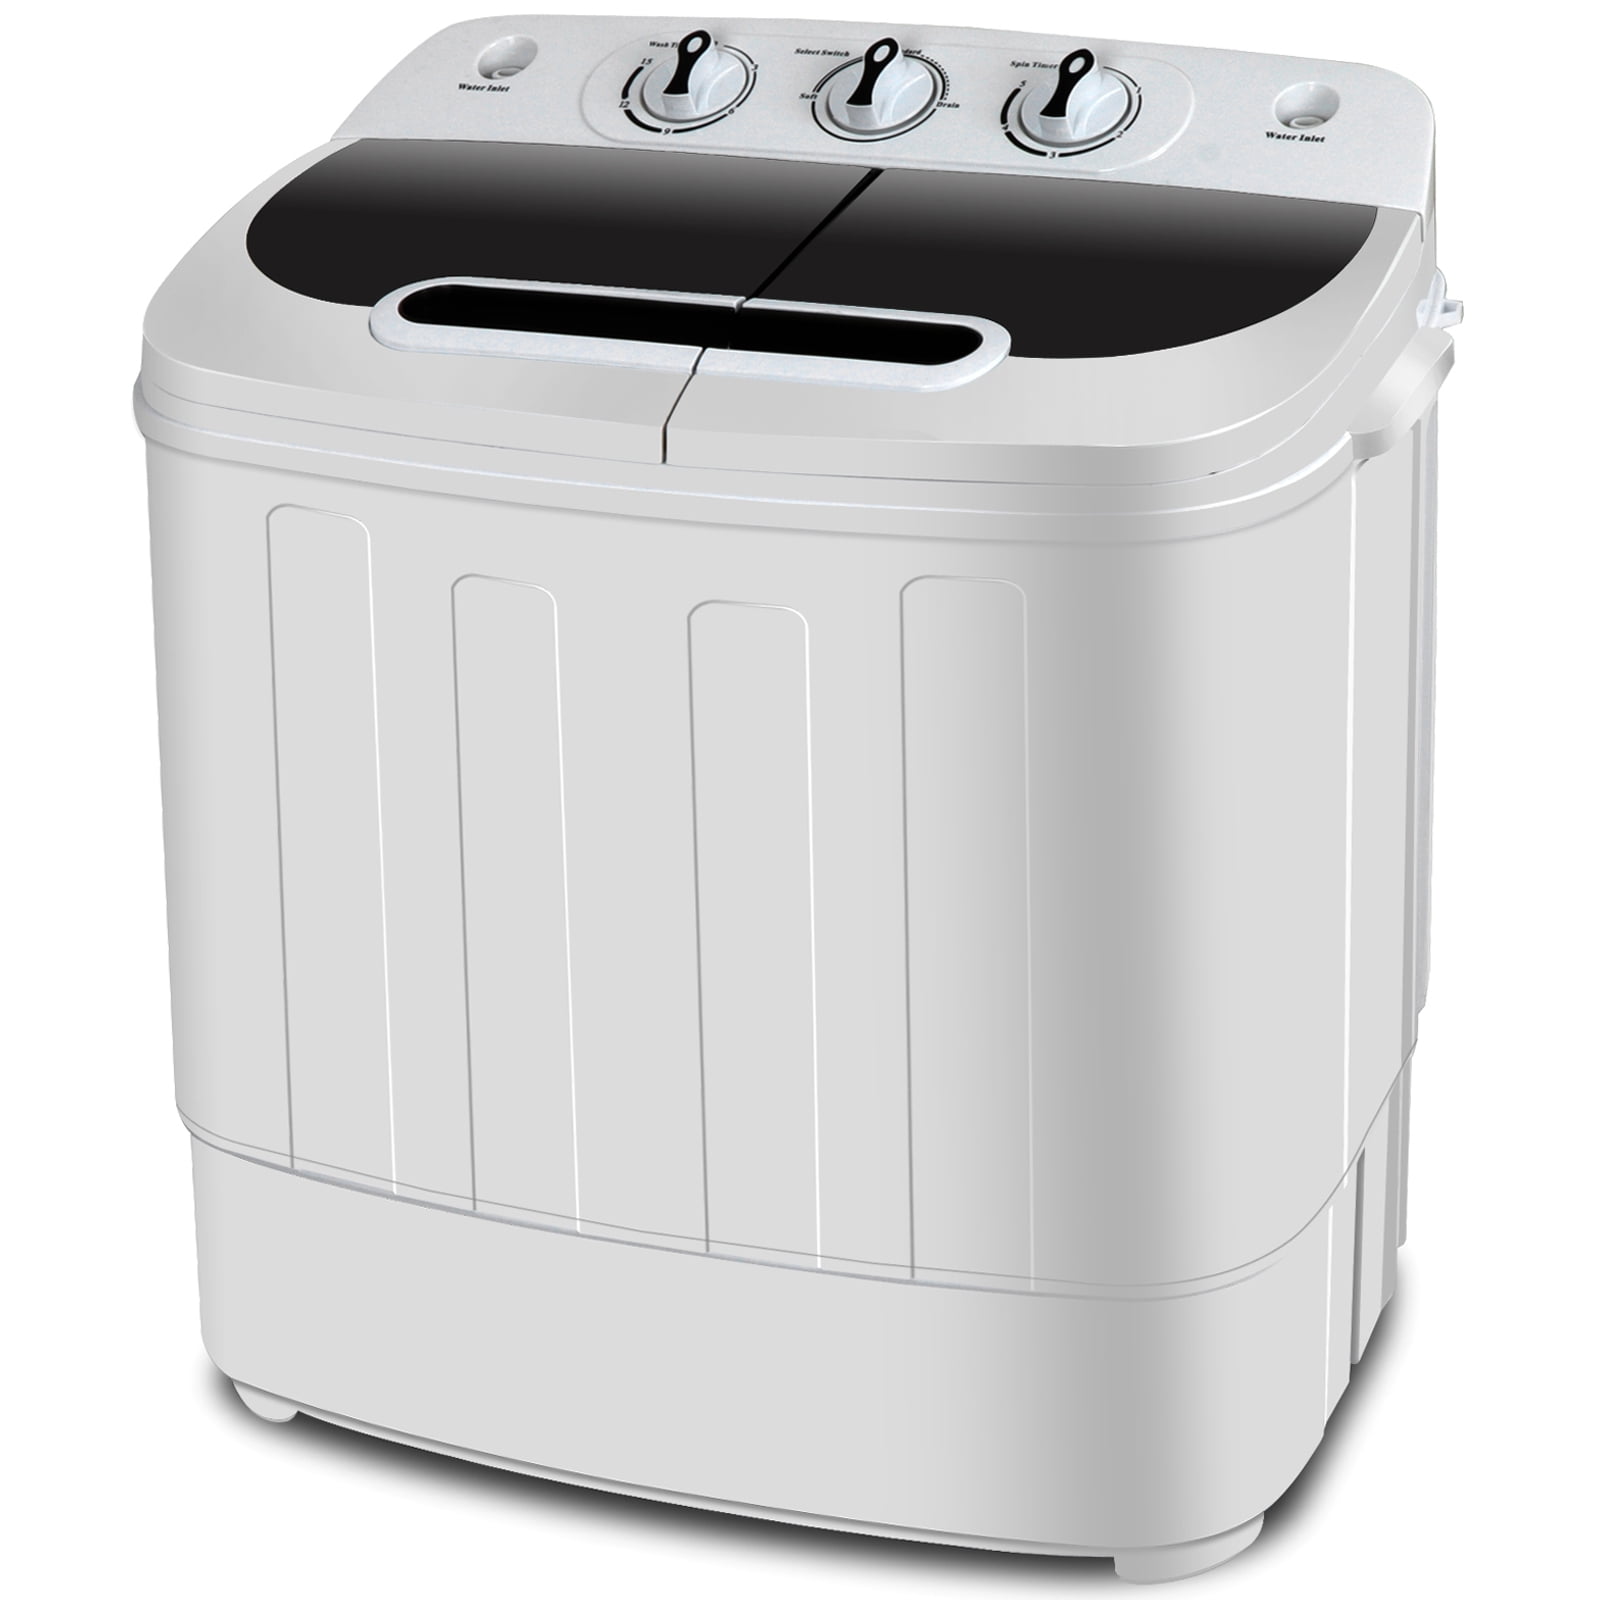 Portable Mini Wash Machine Compact Twin Tub 13lbs Top Load Washer Spin & Dryer 